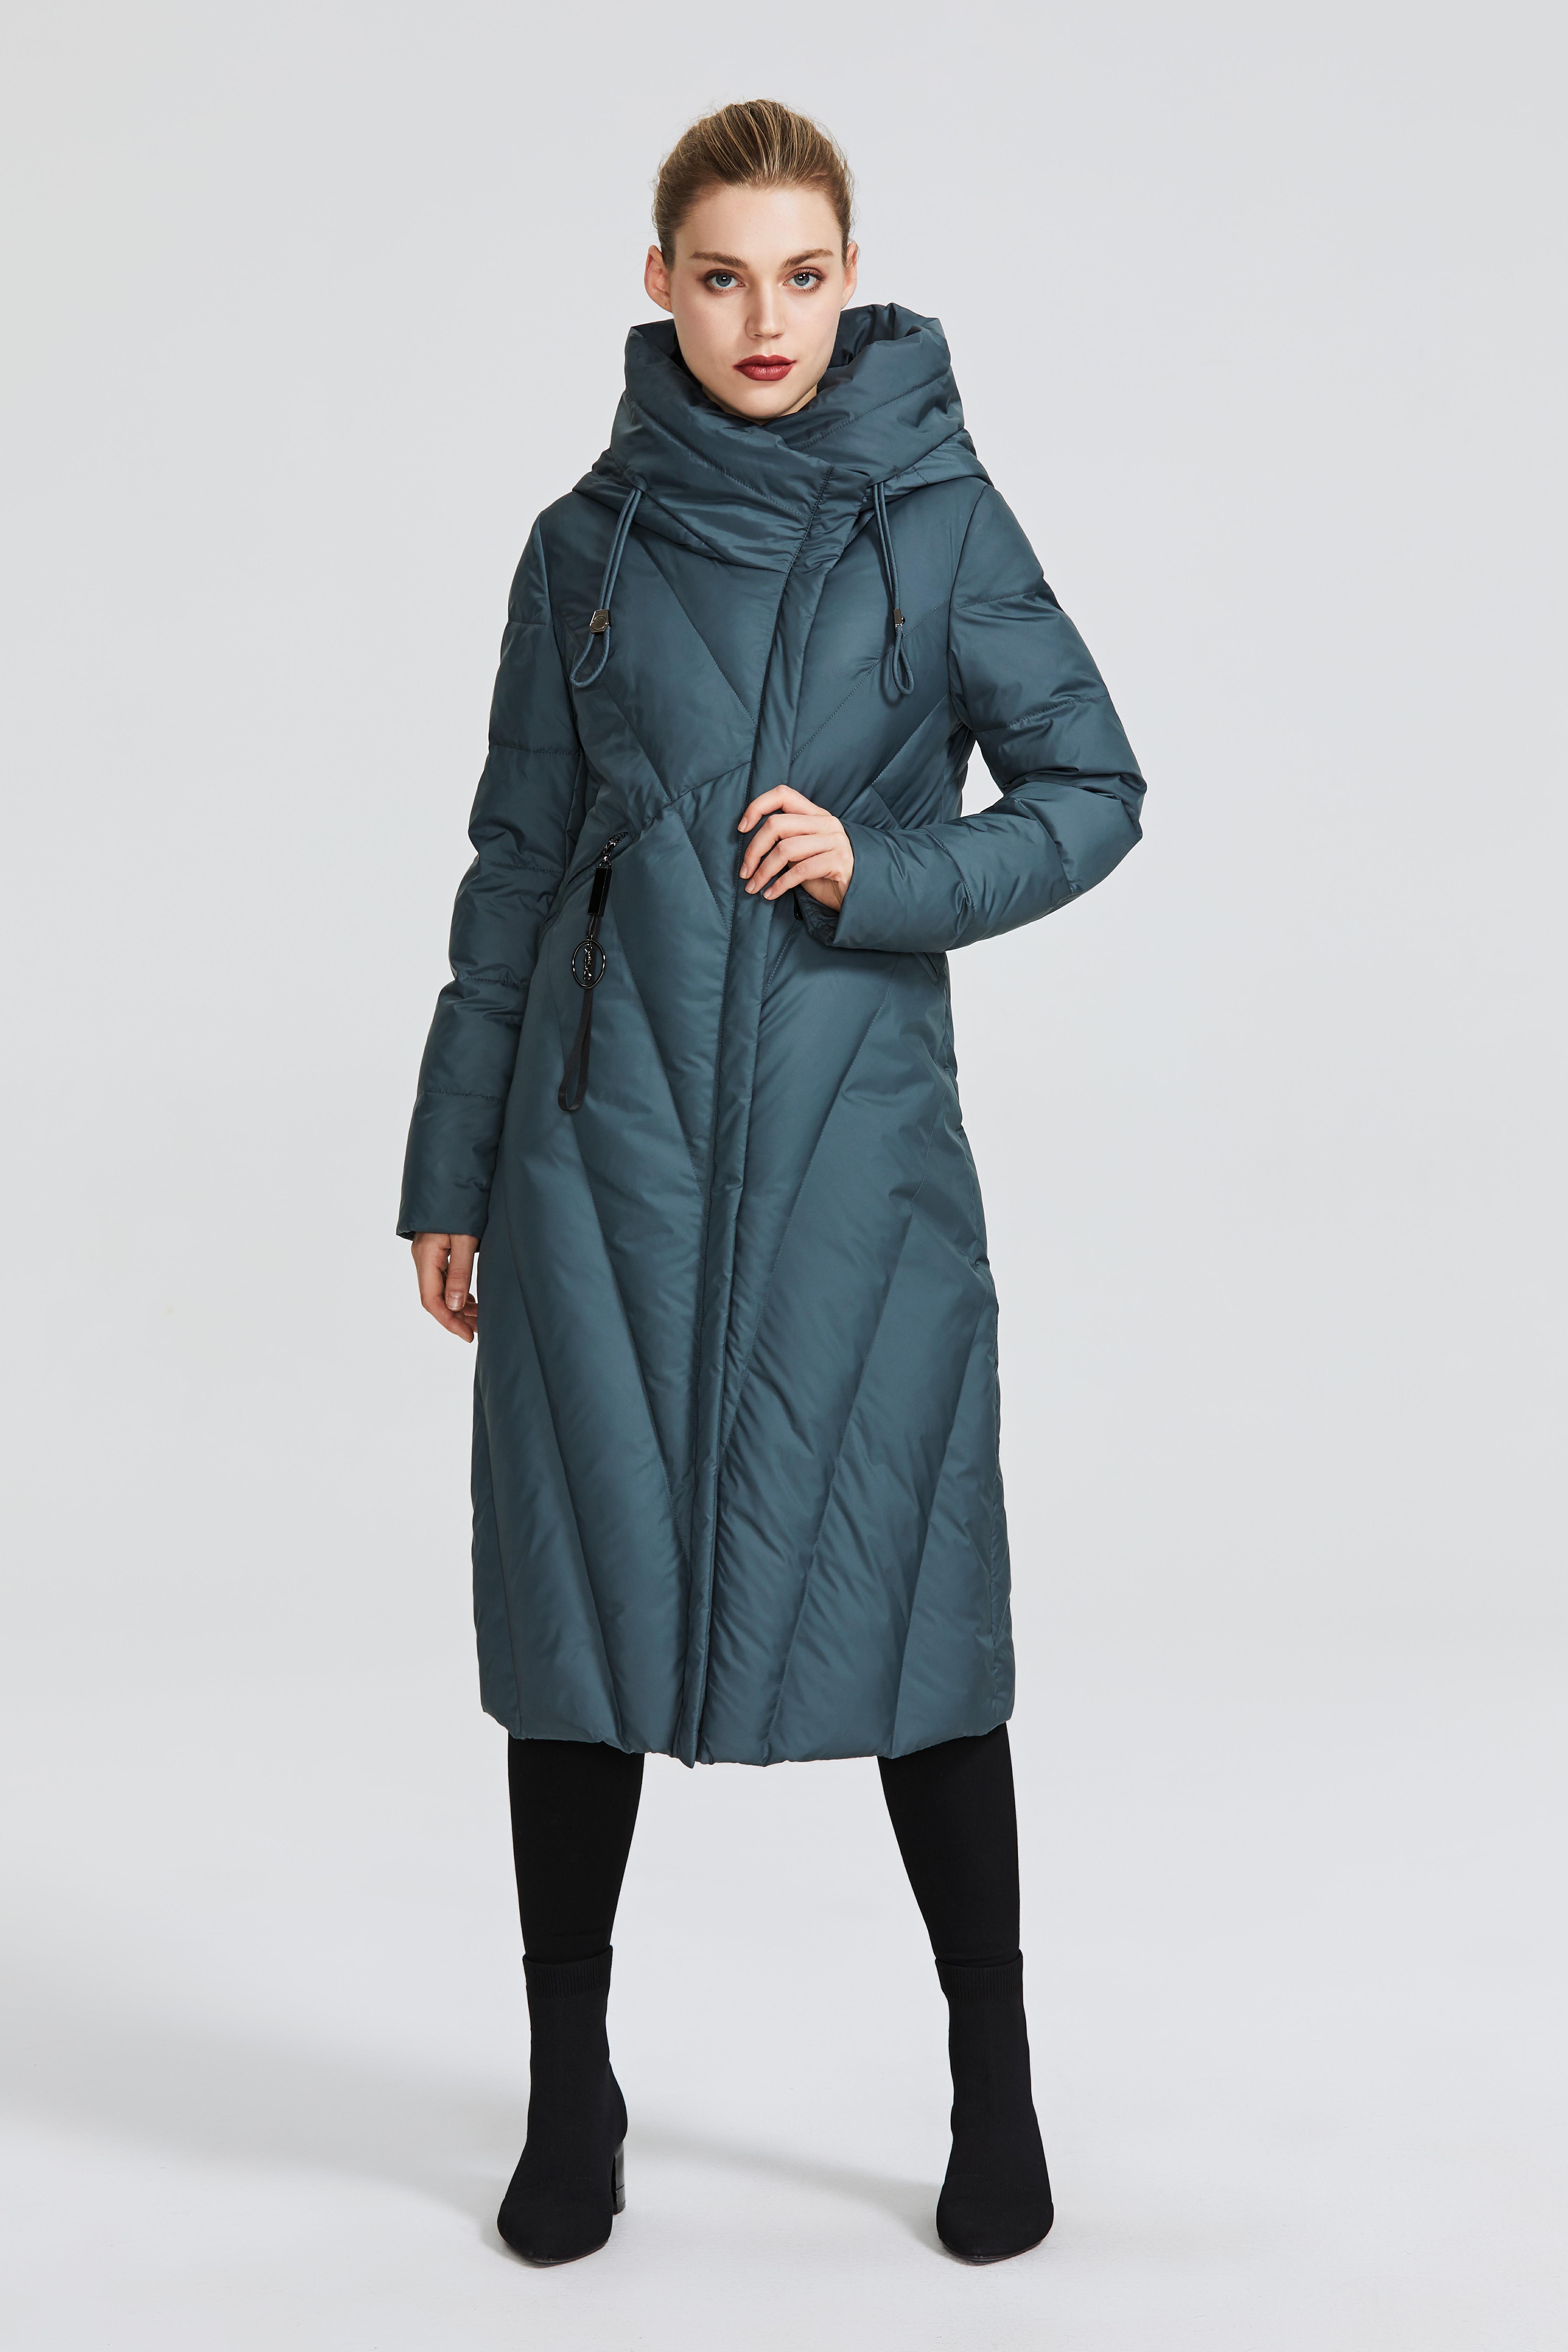 Miegofce D99266新しいコレクションの女性のコート抵抗力のある防風襟の女性パーカー